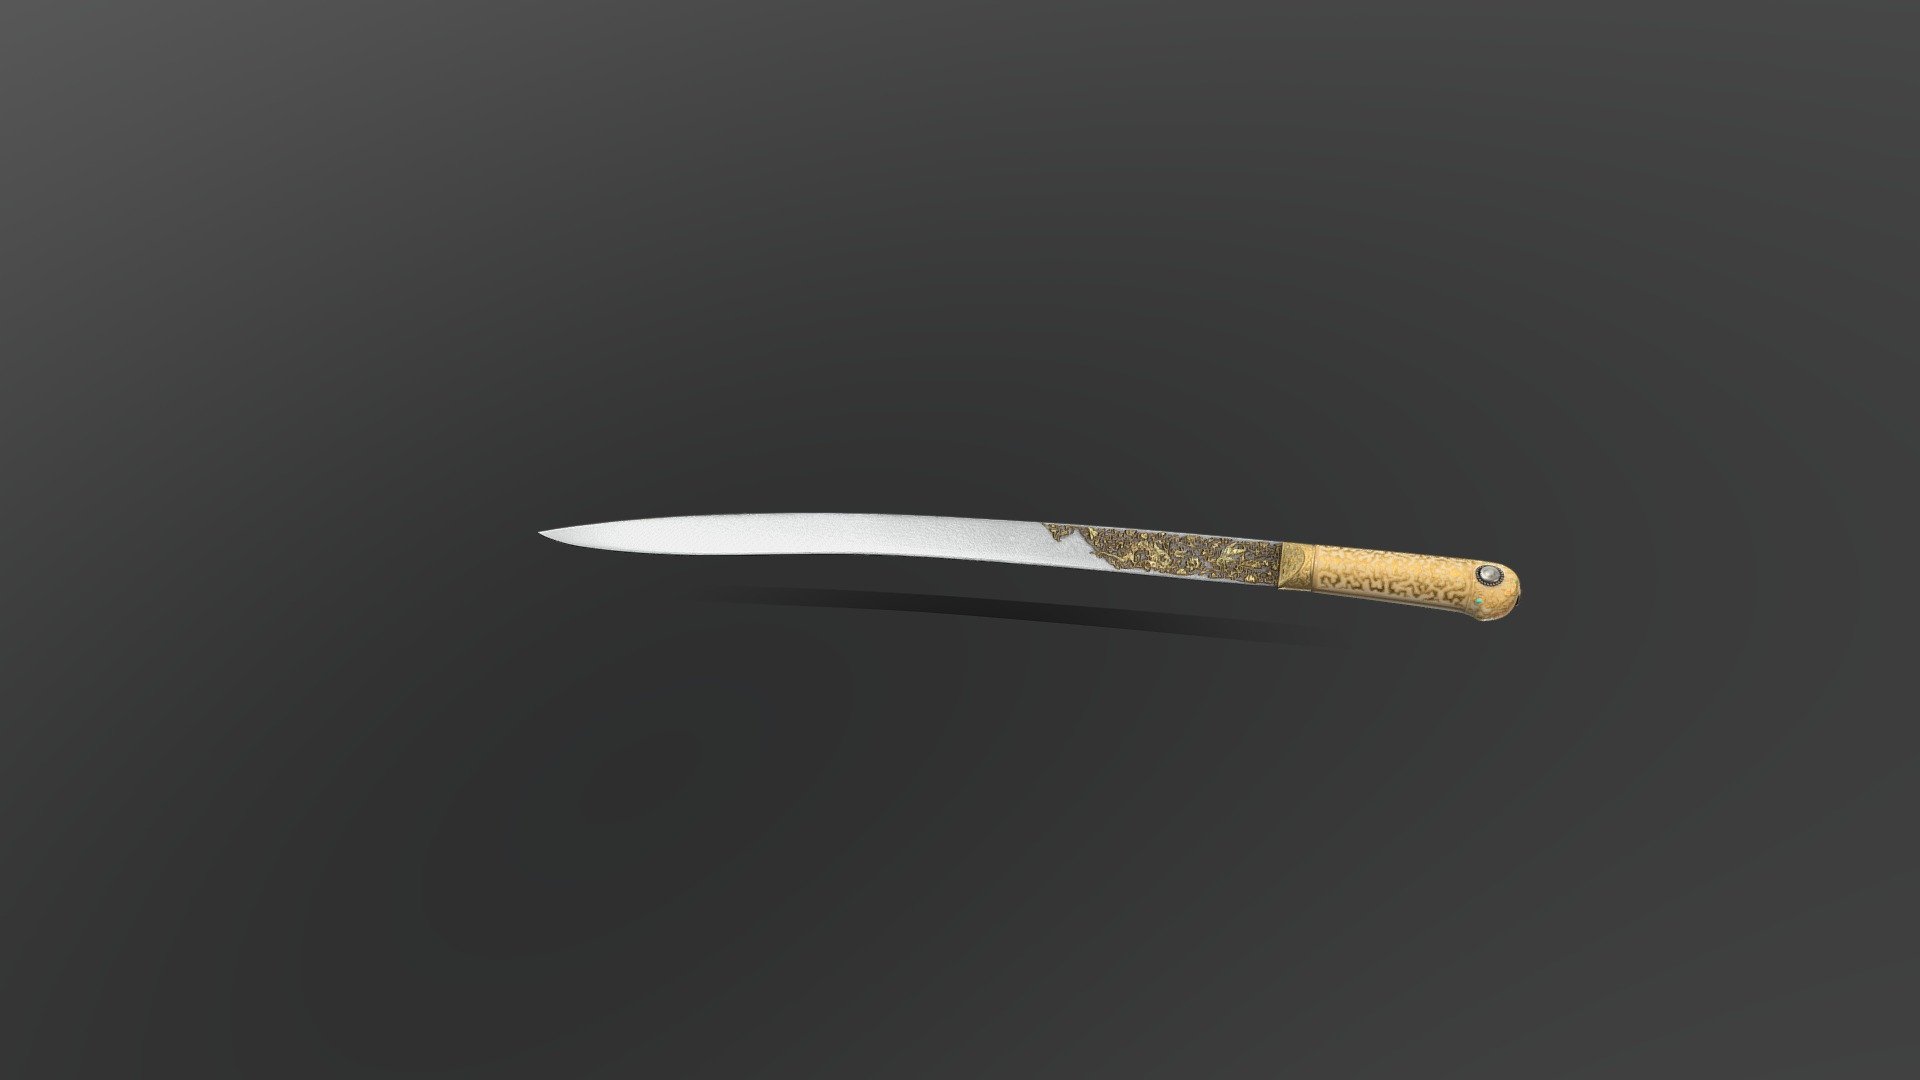 Yatagan Sword